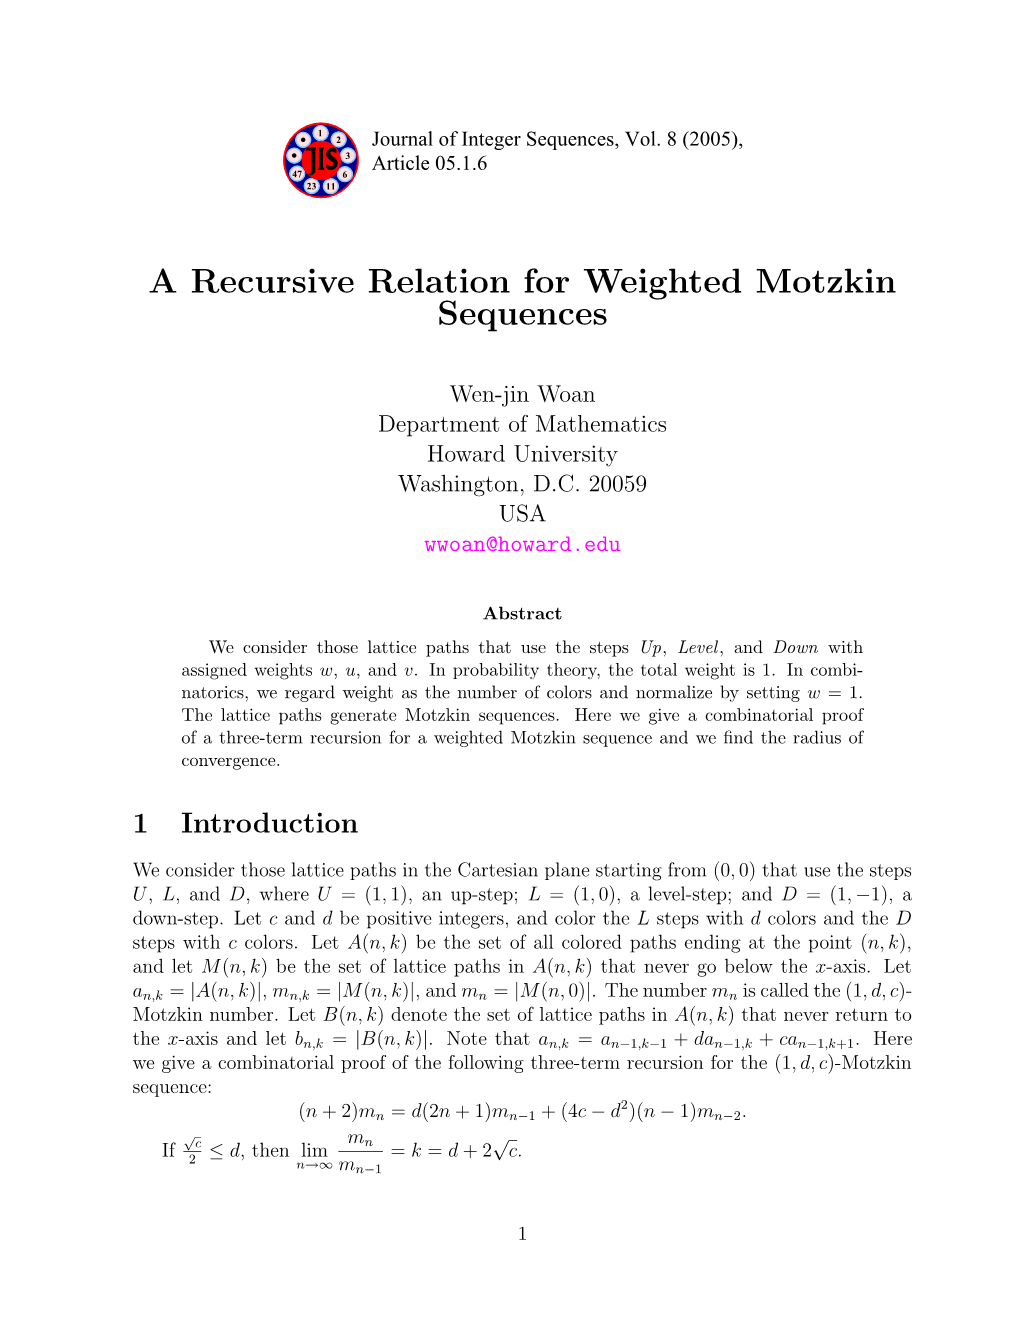 A Recursive Relation for Weighted Motzkin Sequences